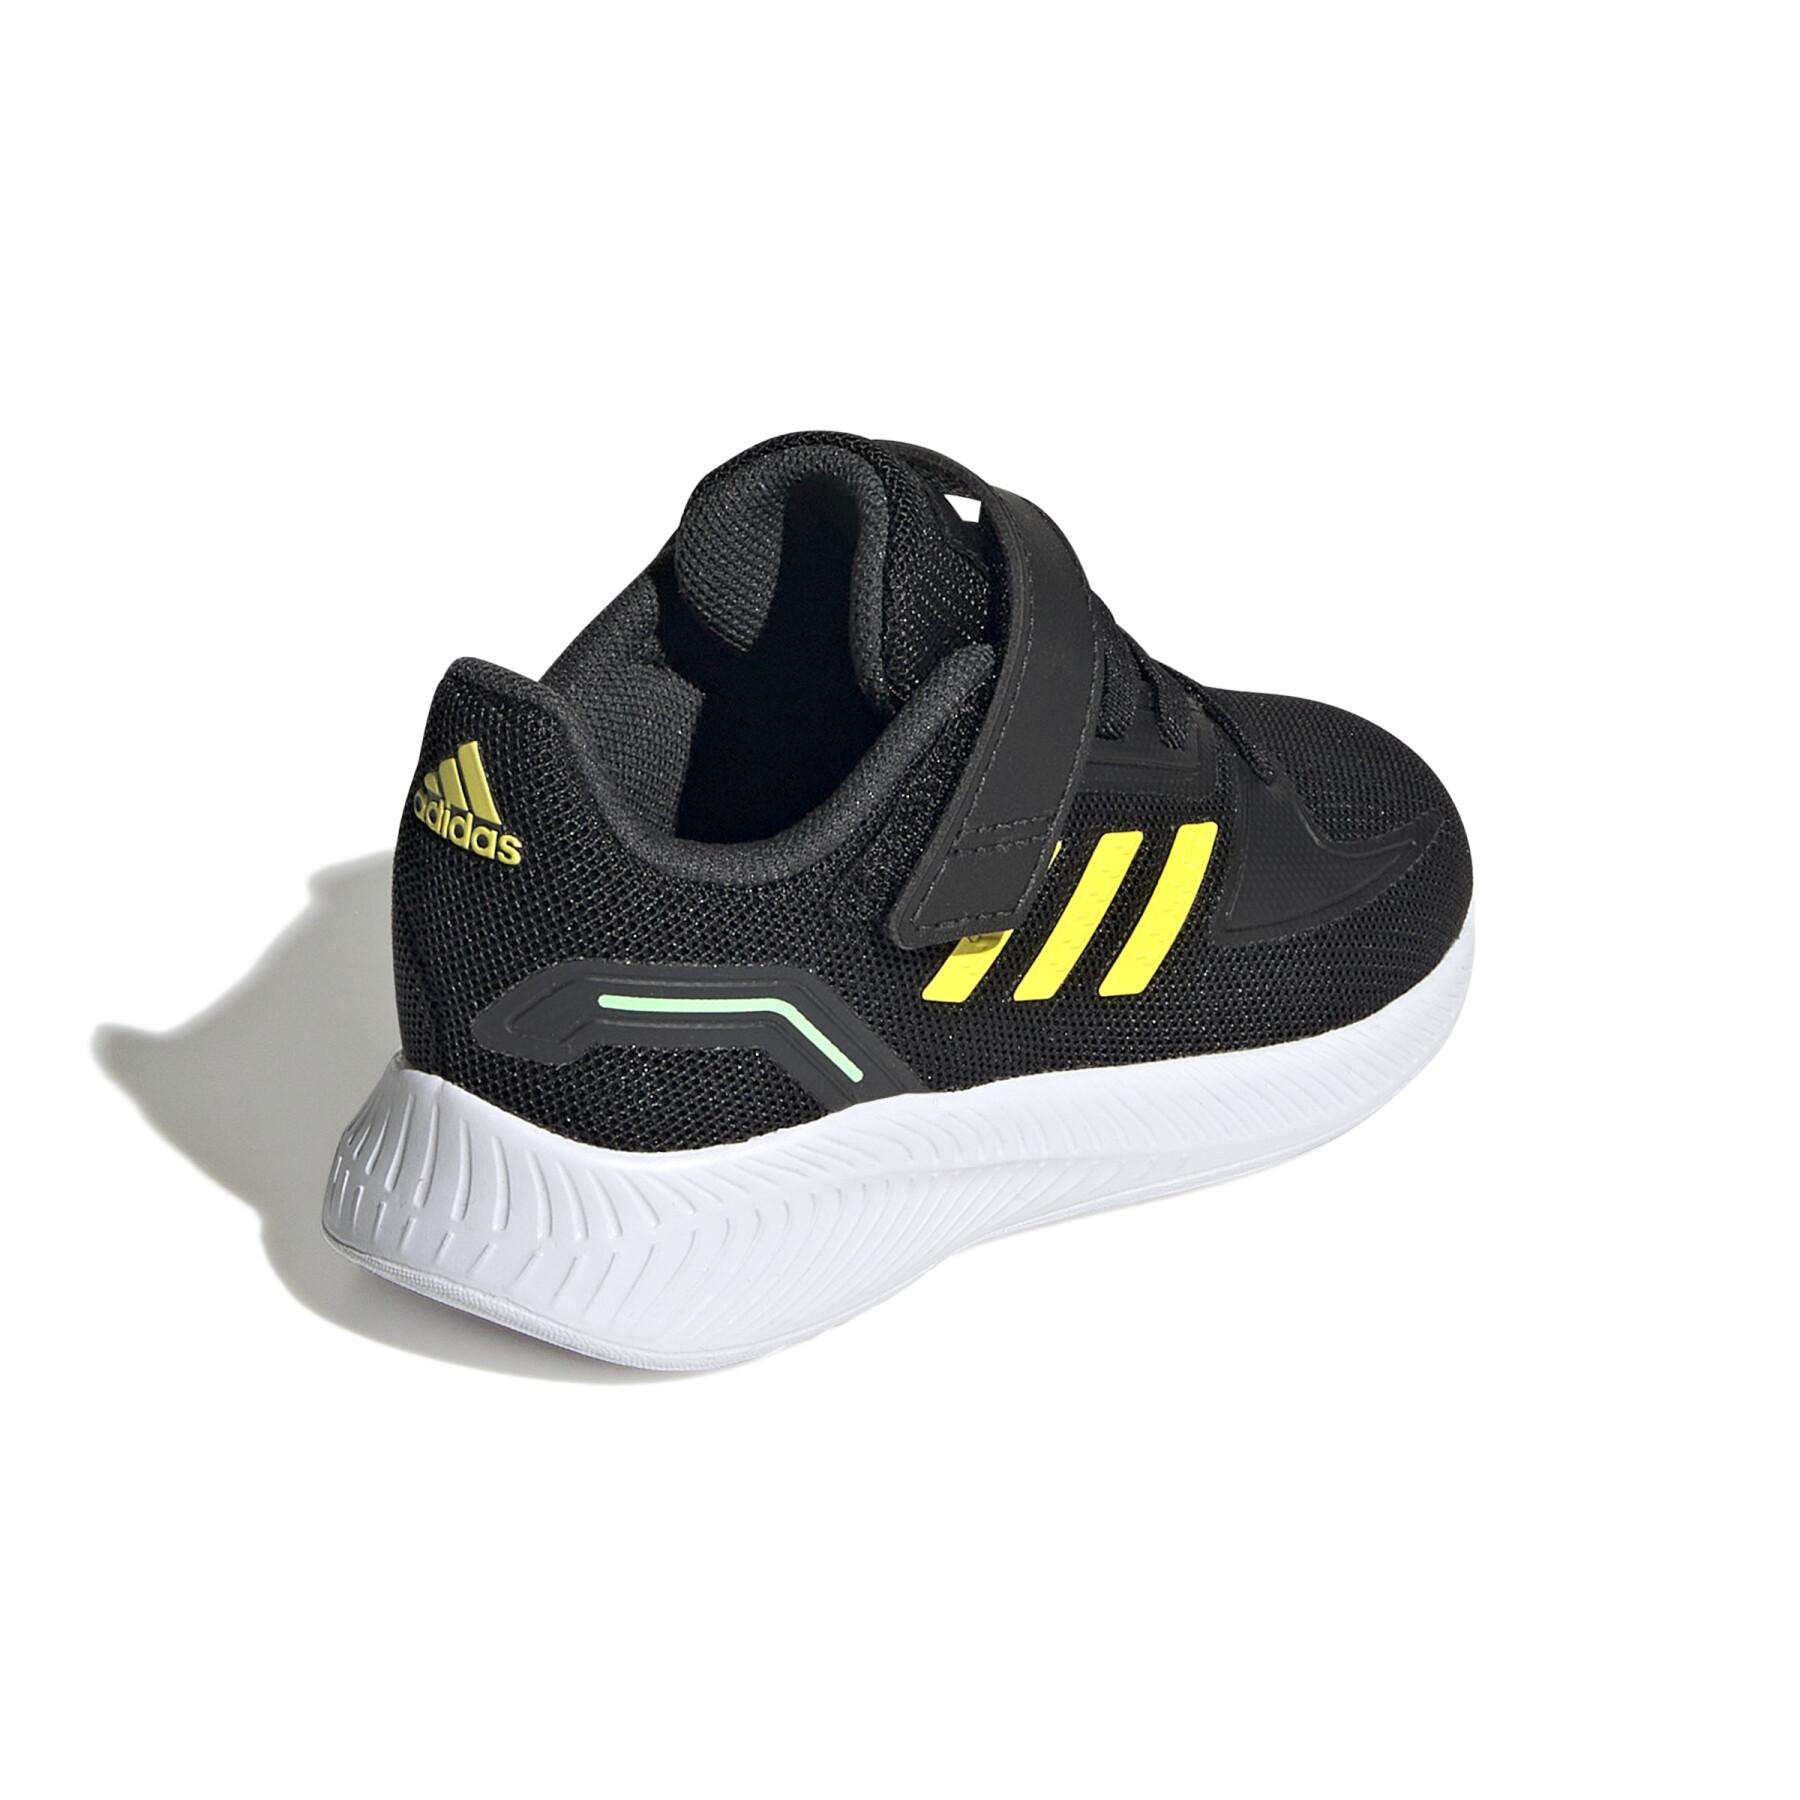 Kinderschoenen adidas Rufalcon 2.0